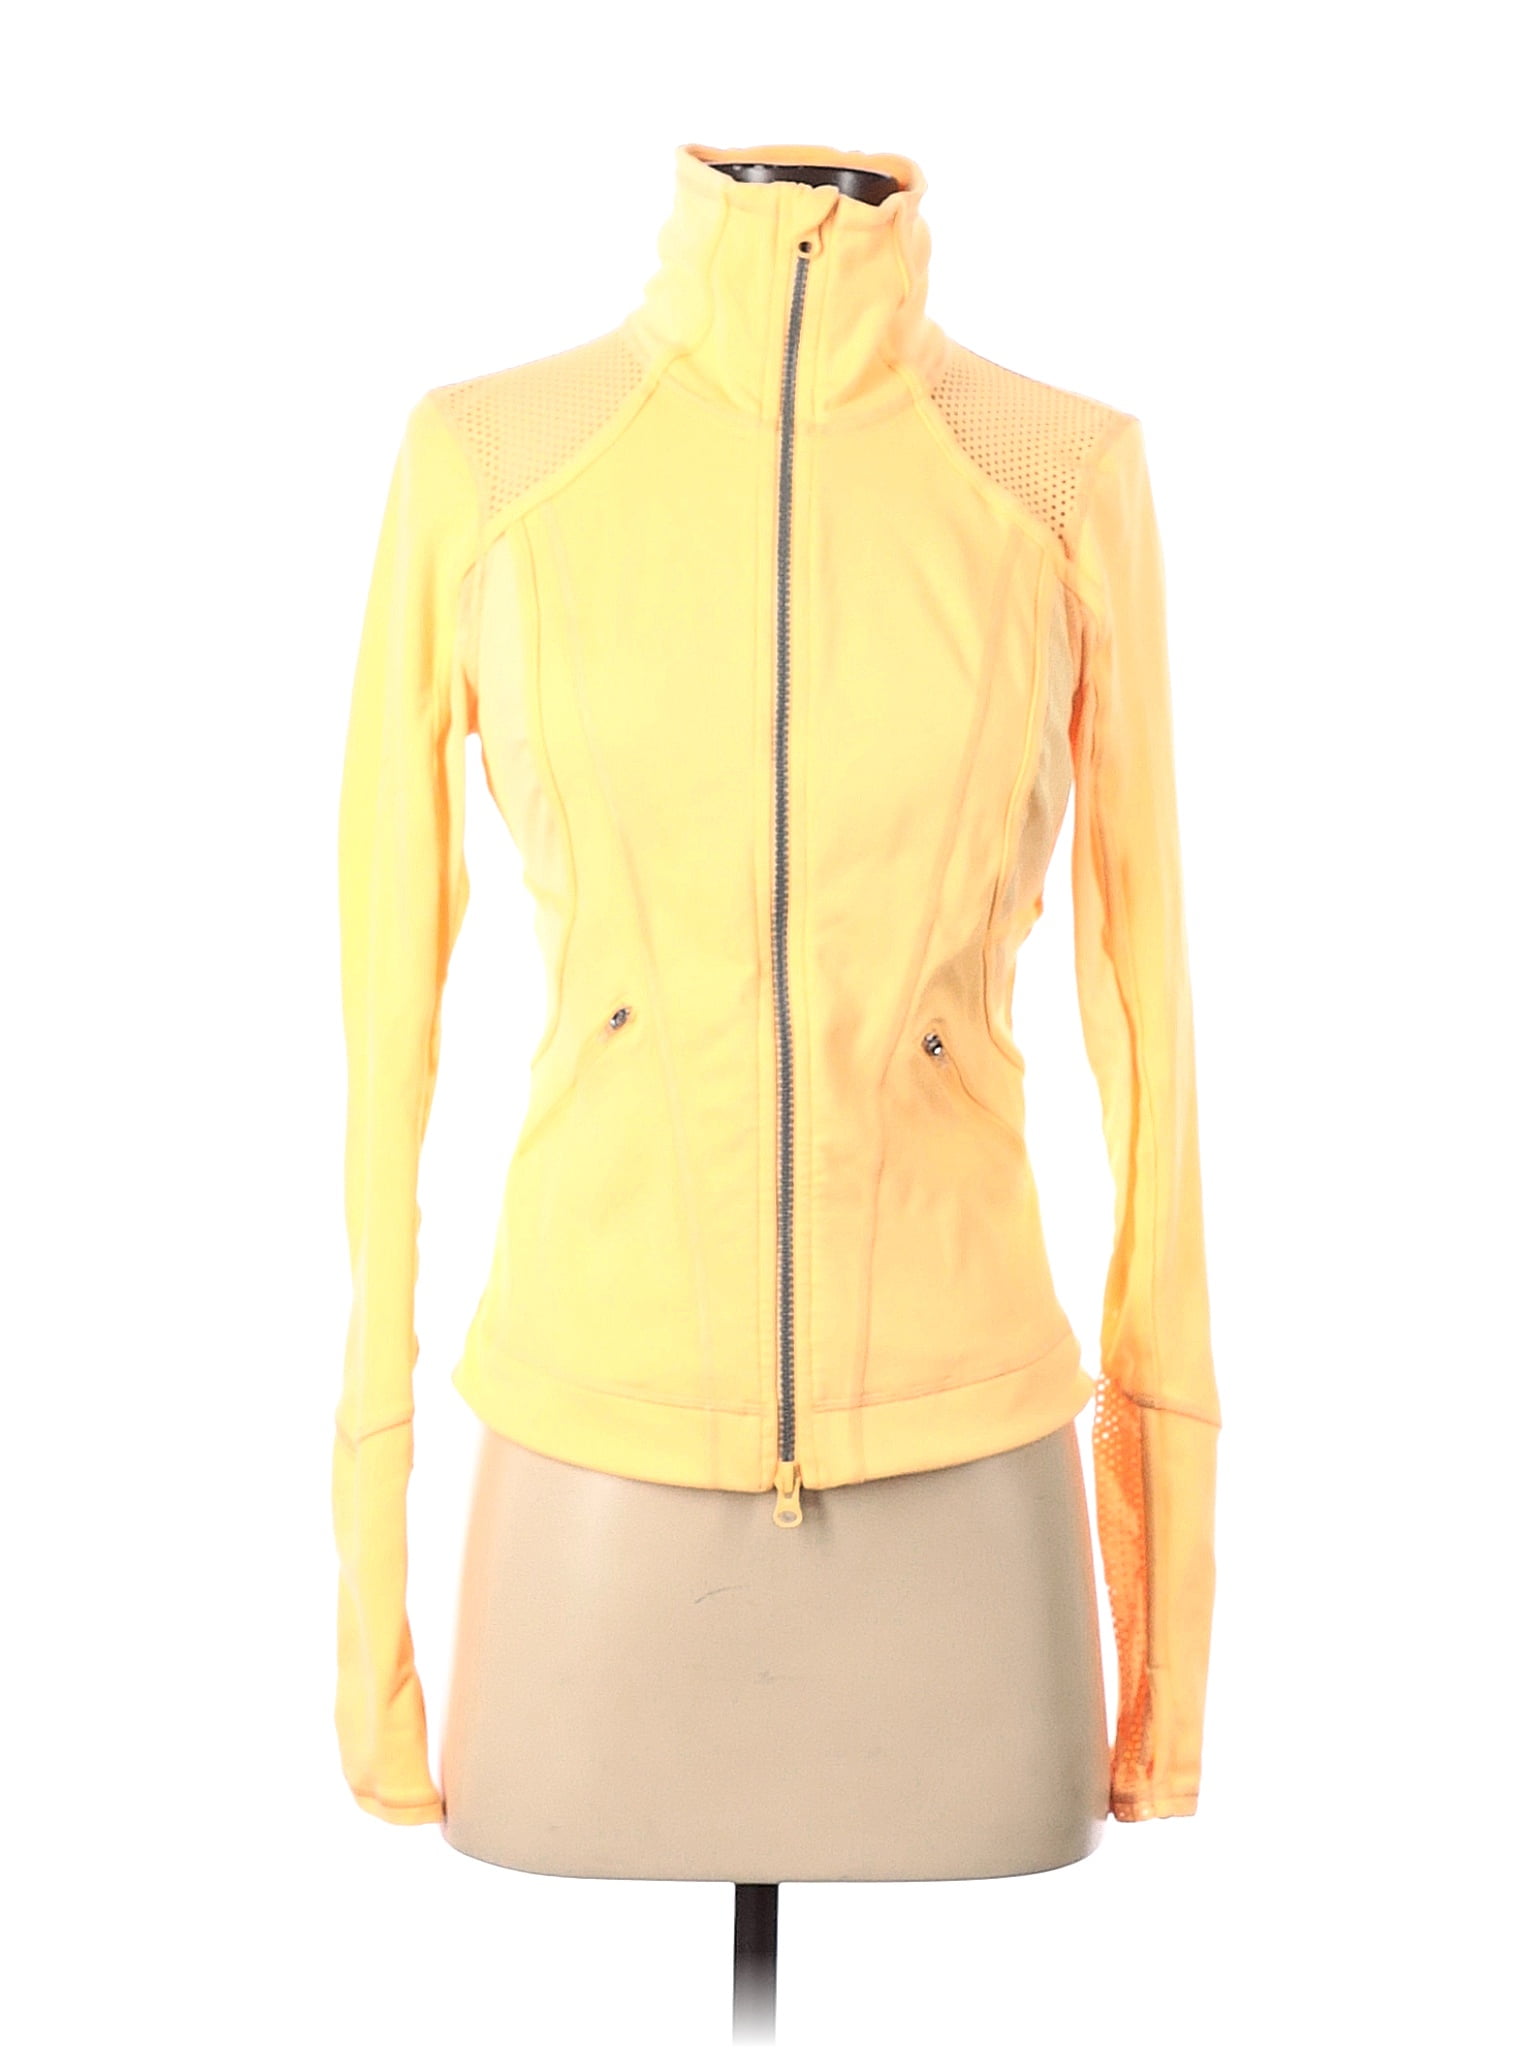 Zella Solid Yellow Track Jacket Size S - 80% off | thredUP